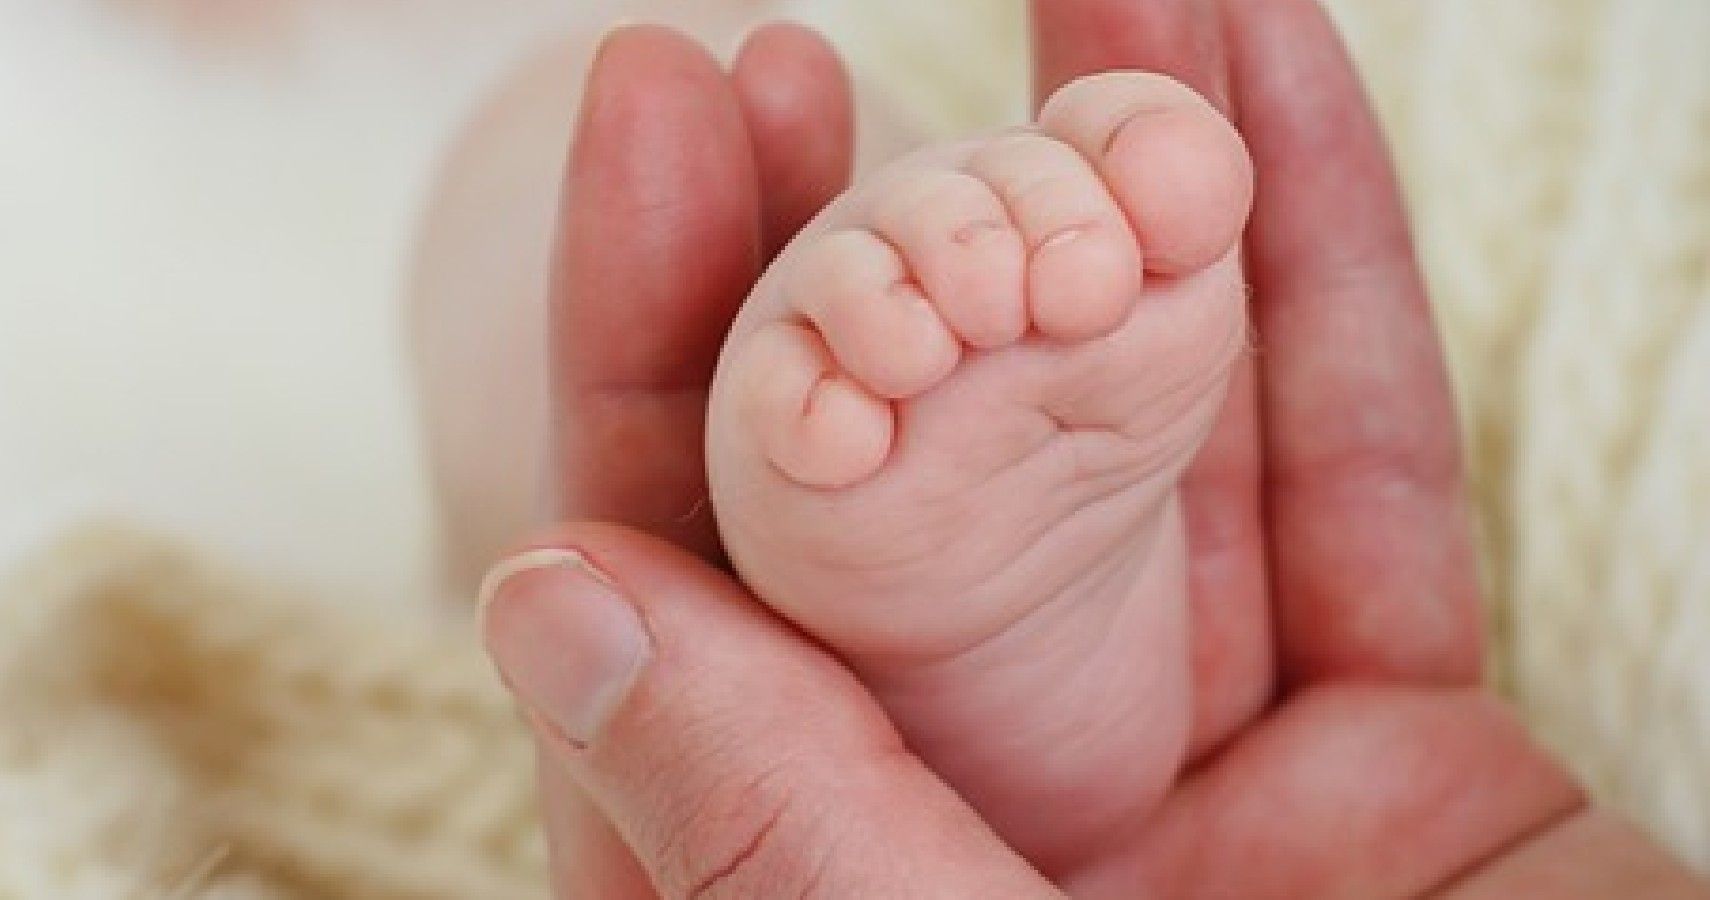 Jessa Duggar Gives Birth To Her Fourth Baby